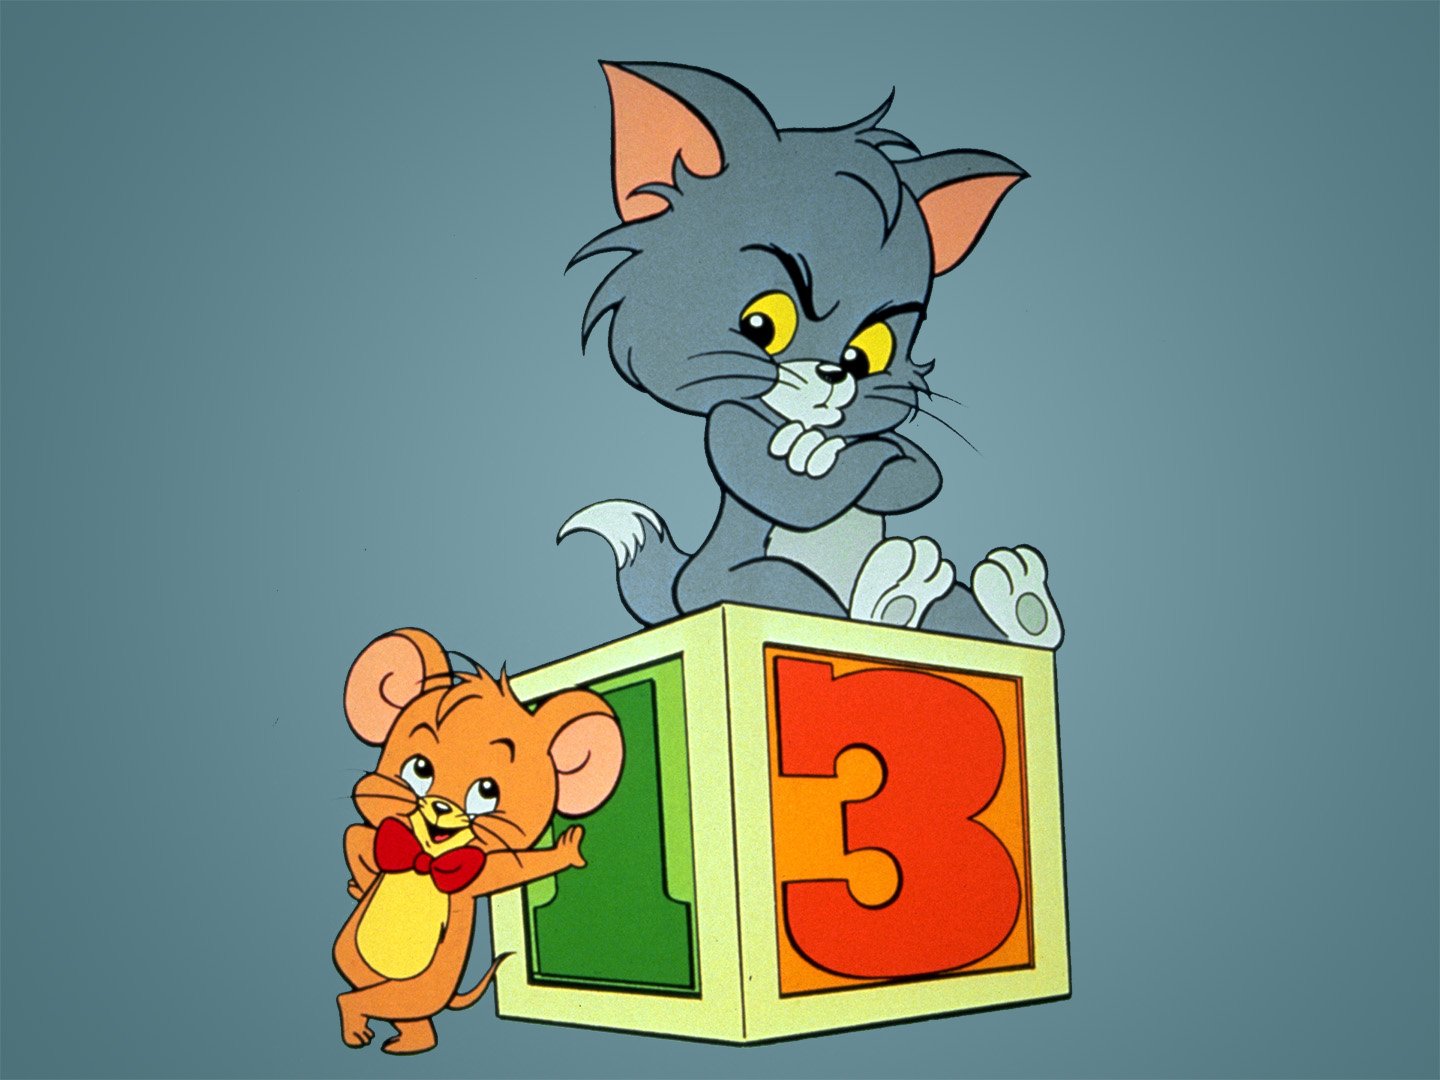 Baby tom. Tom and Jerry Kids. Том и Джерри в детстве. Маленький том. Том и Джерри детские годы.